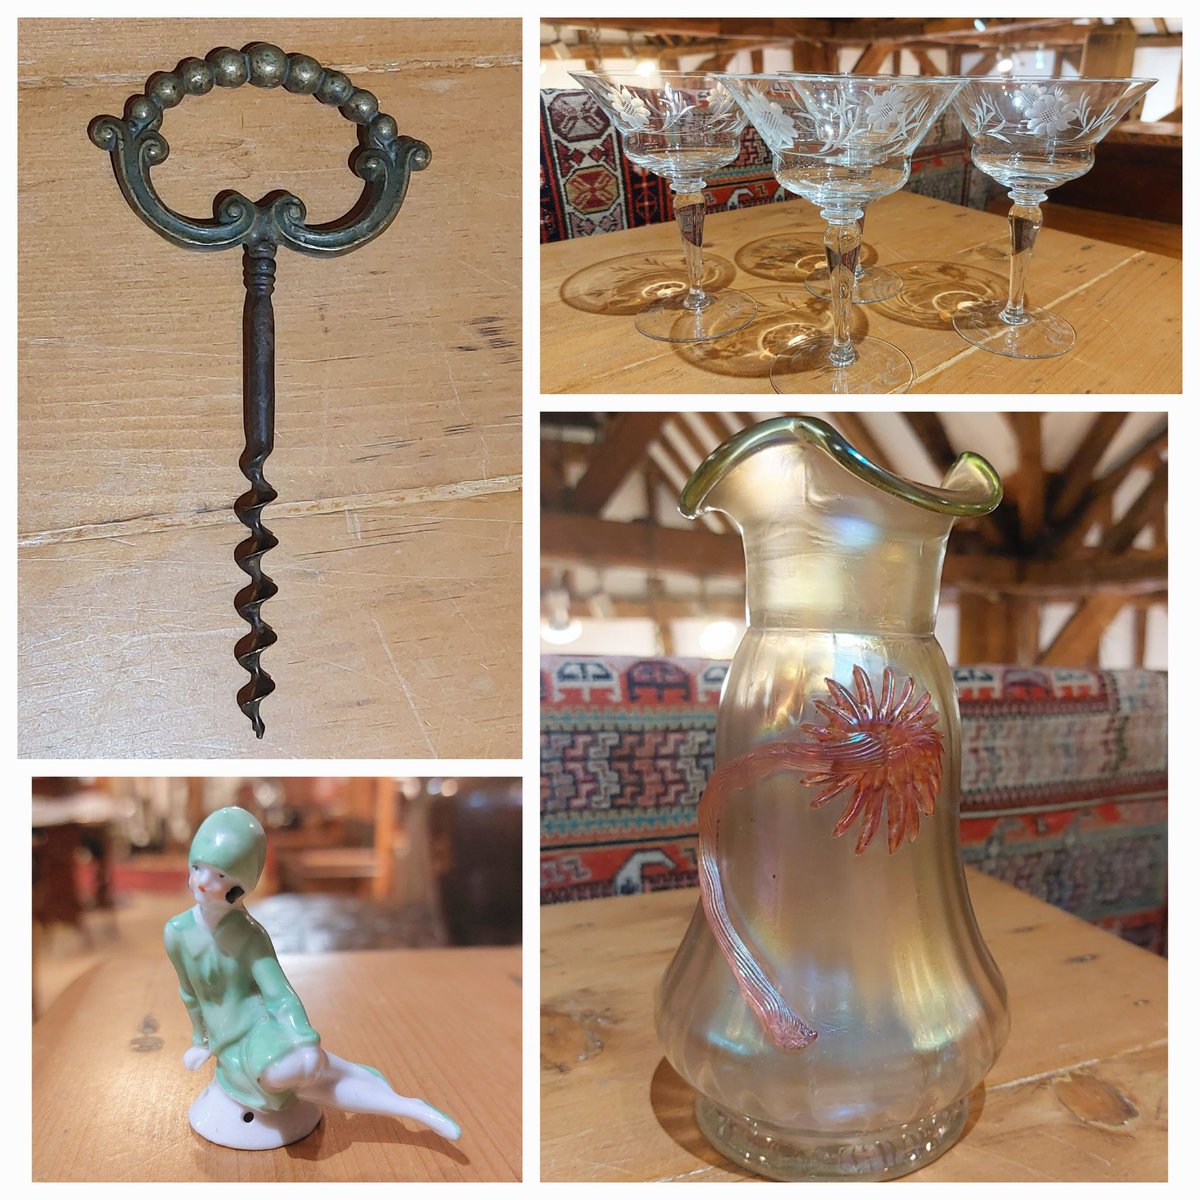 #silkkilim #vintagechampagneglasses #vintagecorkscrew #pindoll #lustreglassvase #judismithantiques #eversleybarnantiques